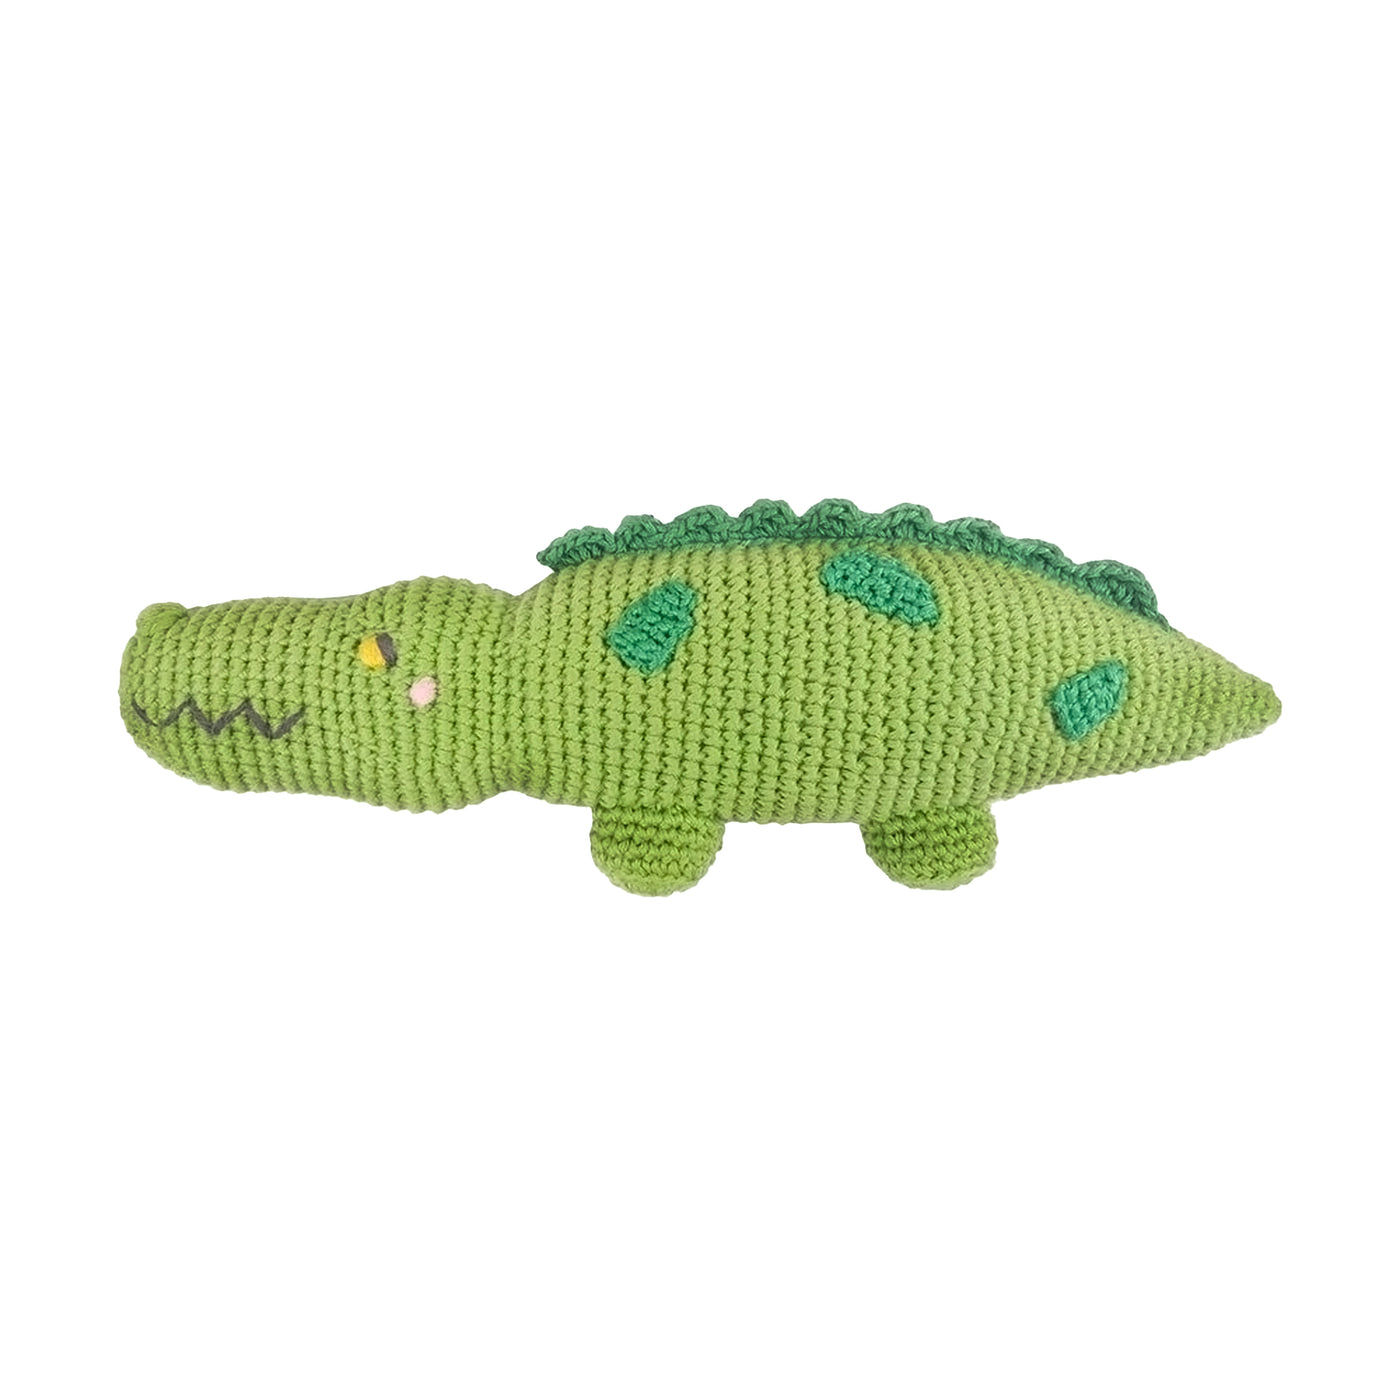 Crochet Croco Casey Rattle Toy